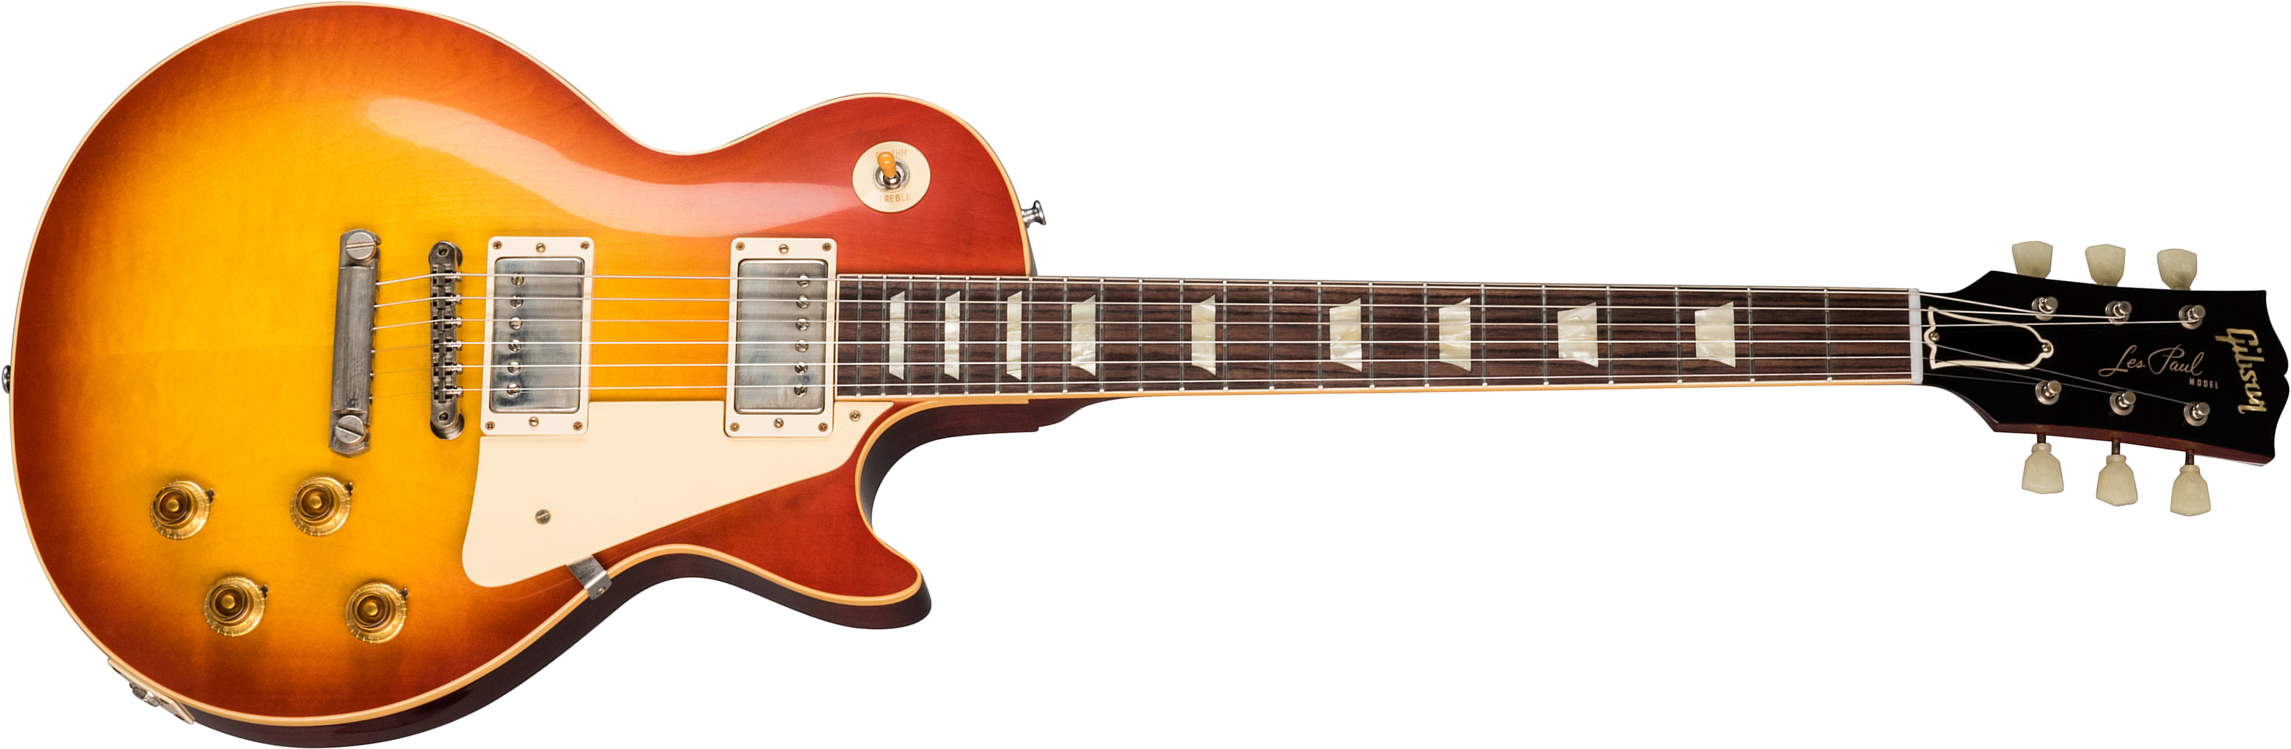 Gibson Custom Shop Les Paul Standard 1958 Reissue 2019 2h Ht Rw - Vos Washed Cherry Sunburst - Single cut electric guitar - Main picture